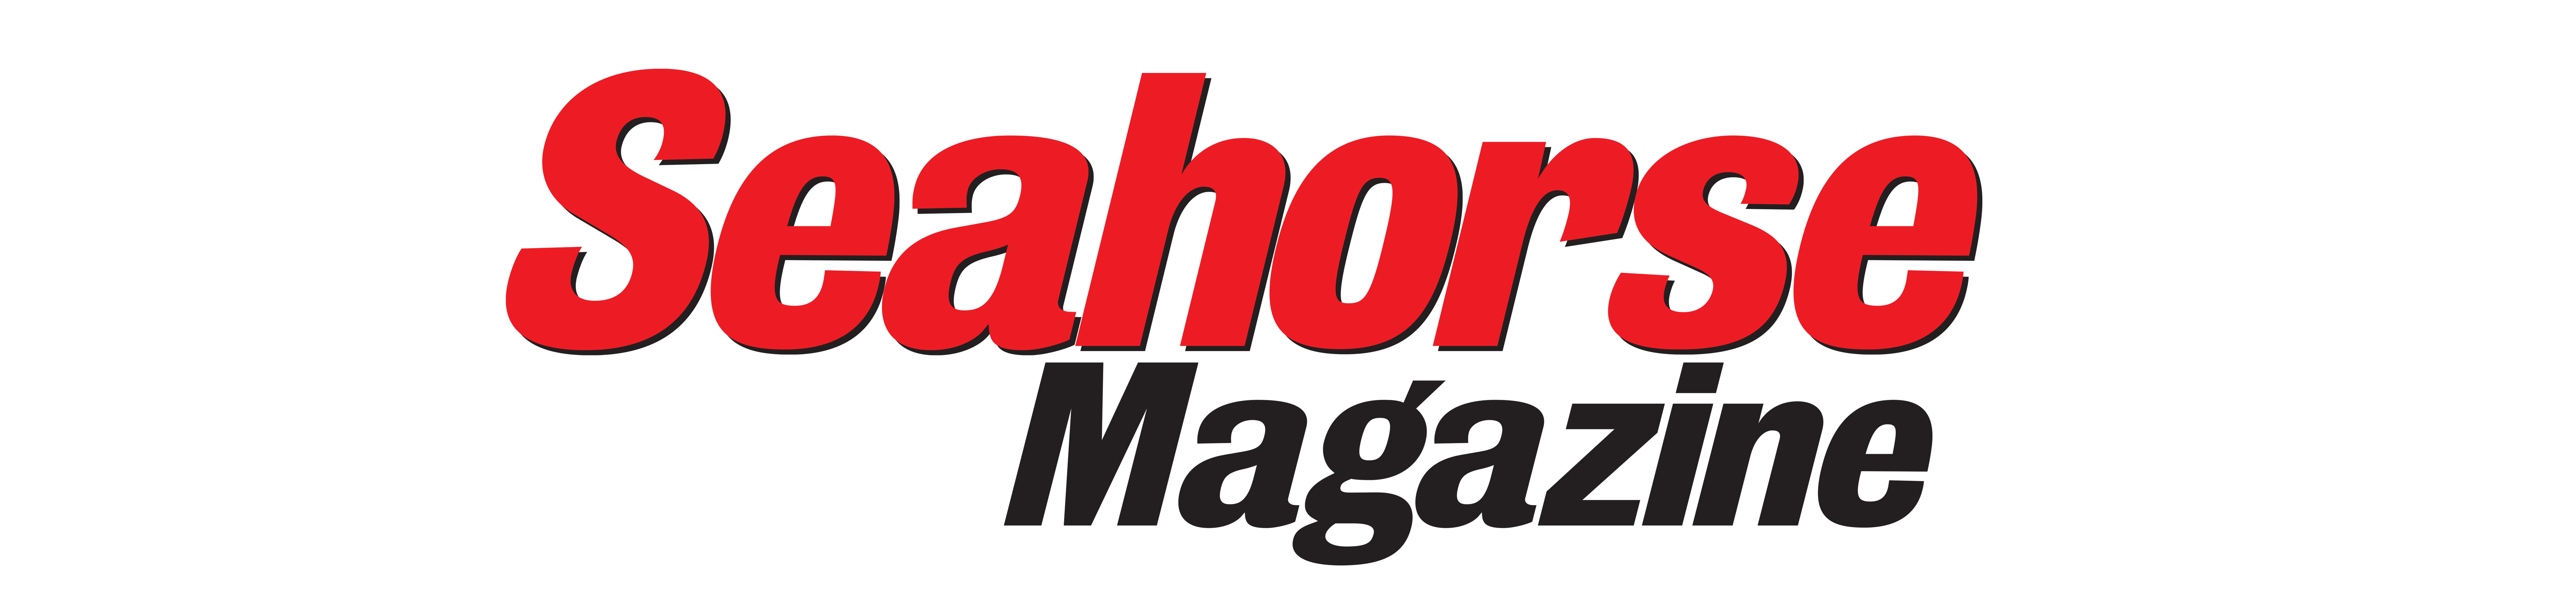 Seahorse Mag Logo